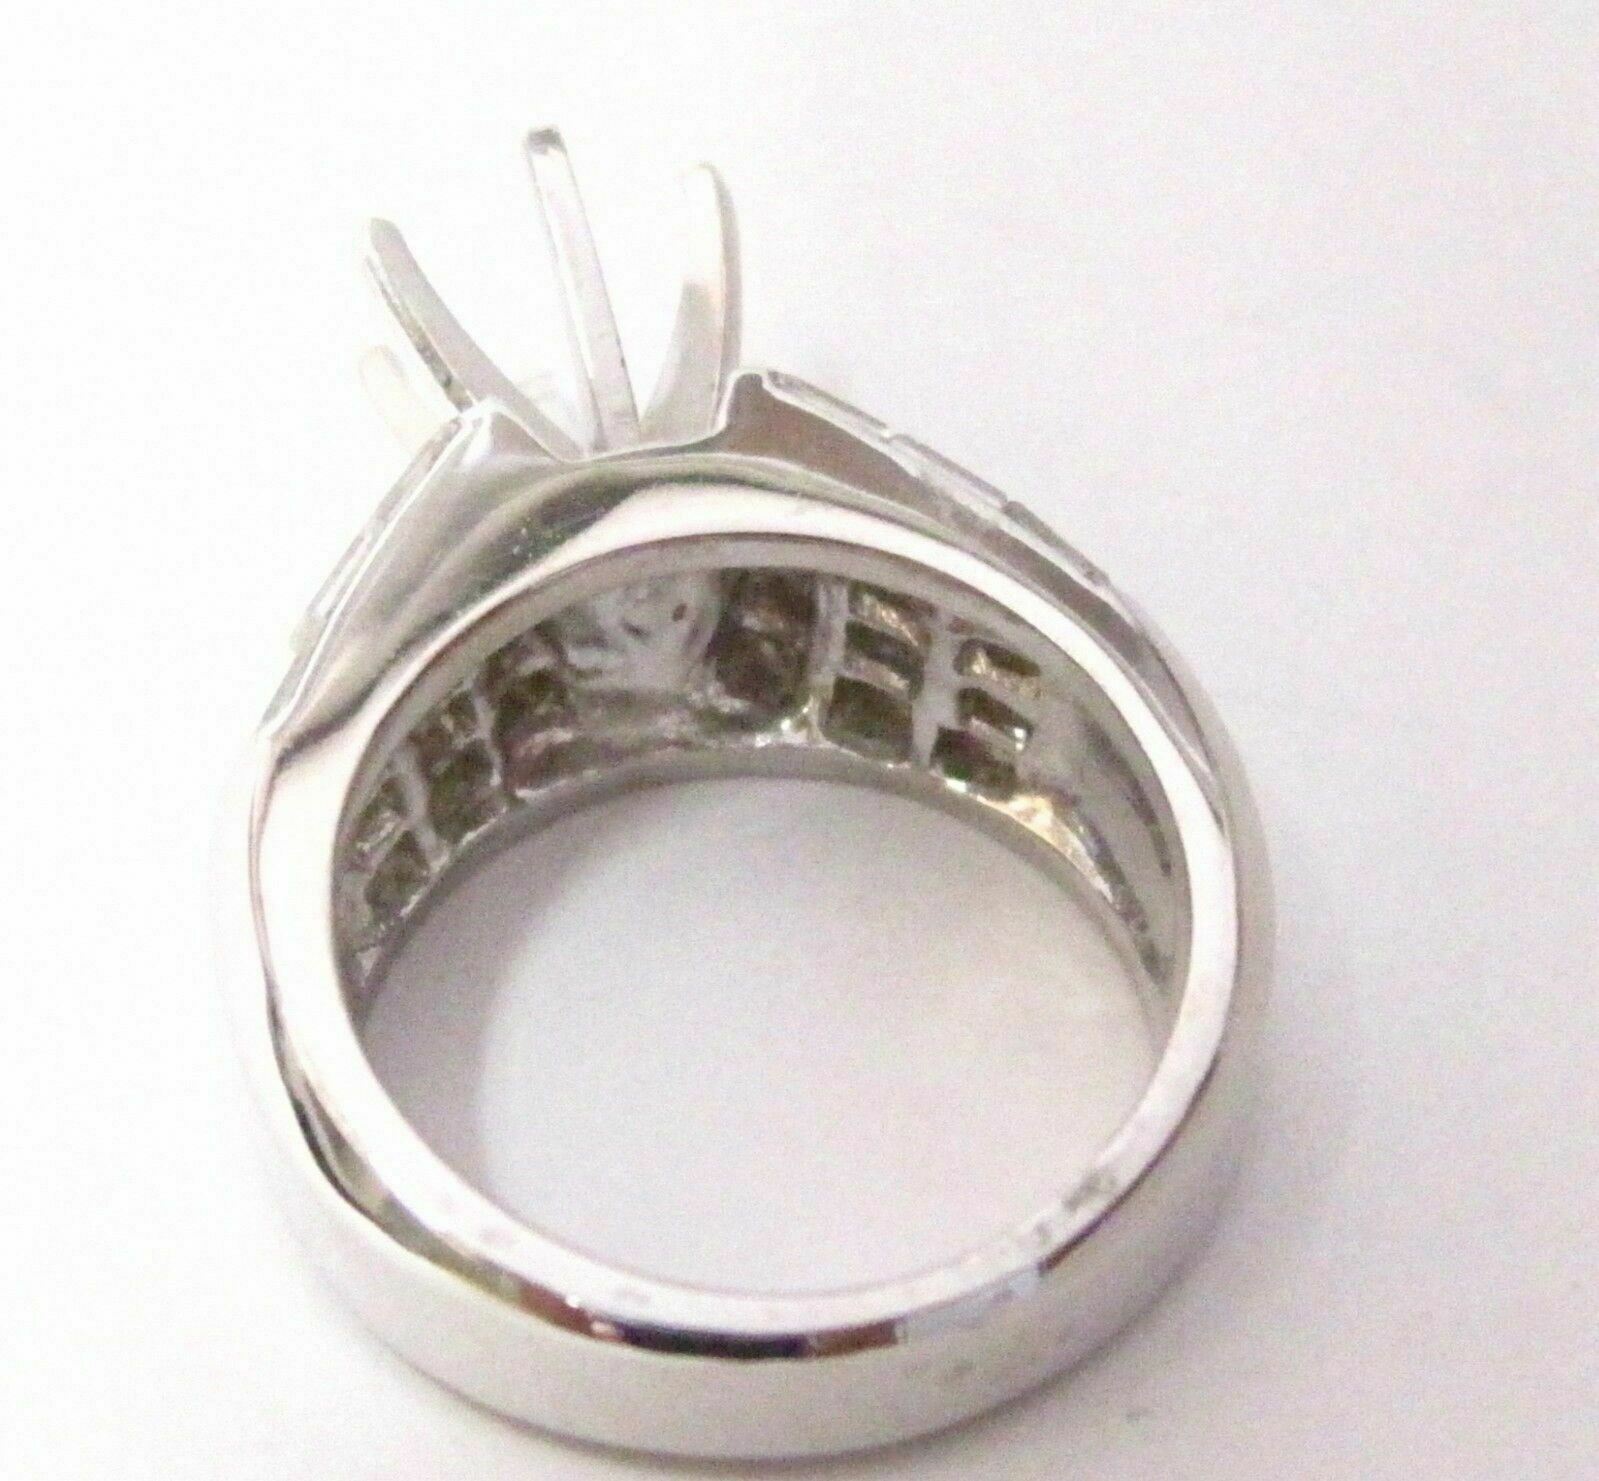 Fine F-VS-1 6 Prongs Wide Semi-Mounting Round Diamond Ring Engagement 18k W/G